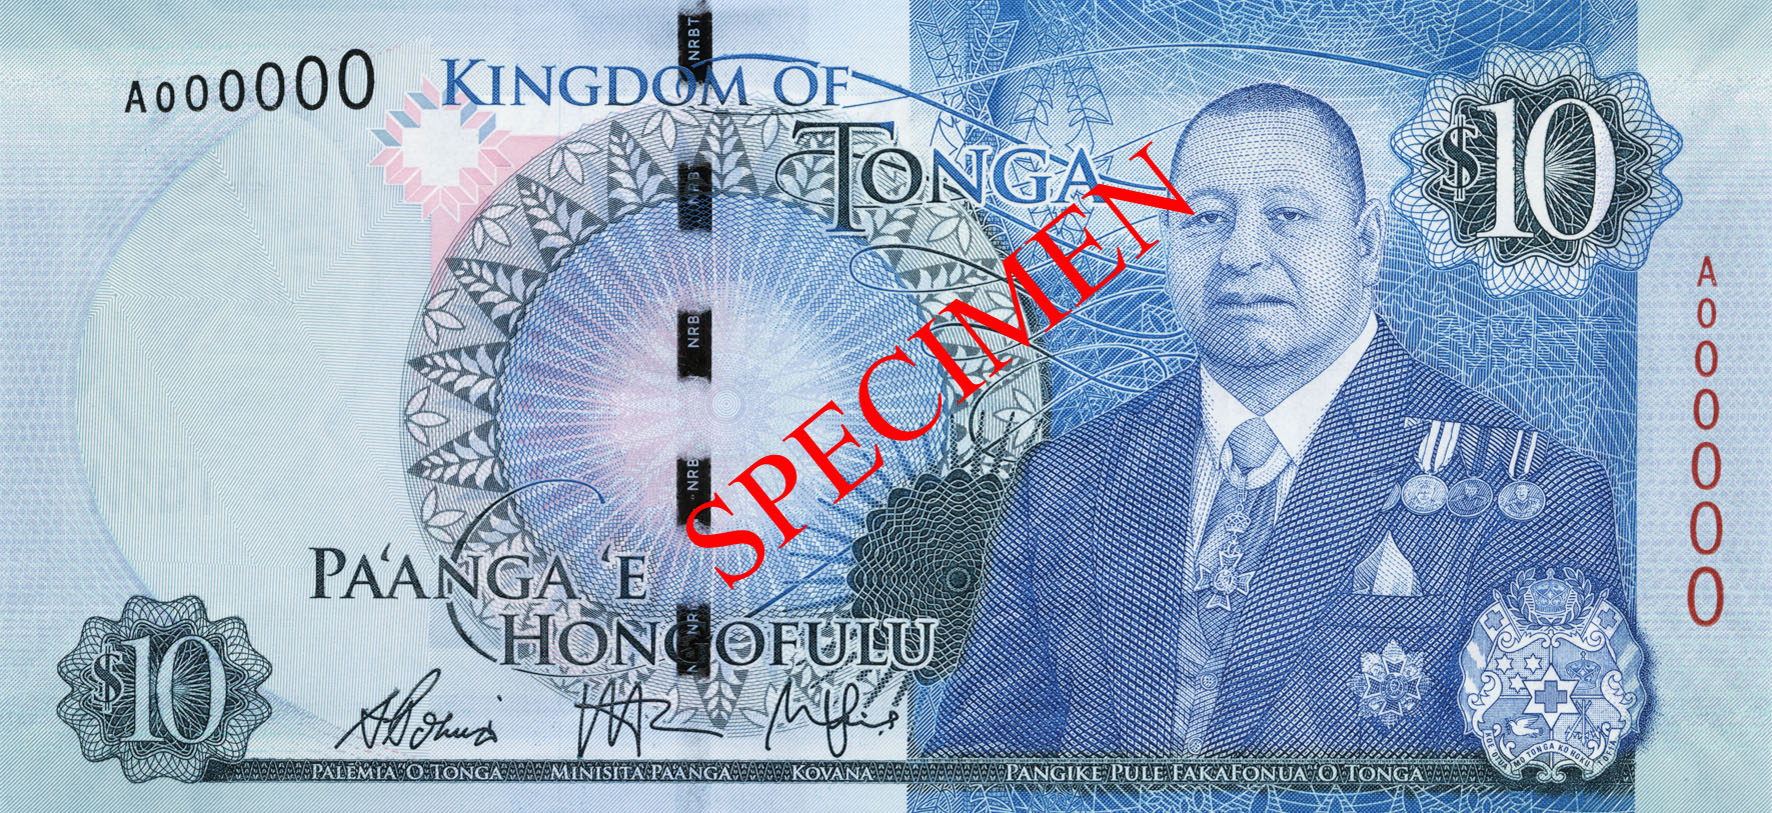 Tonga-10-2015-Specimen-front300dpi